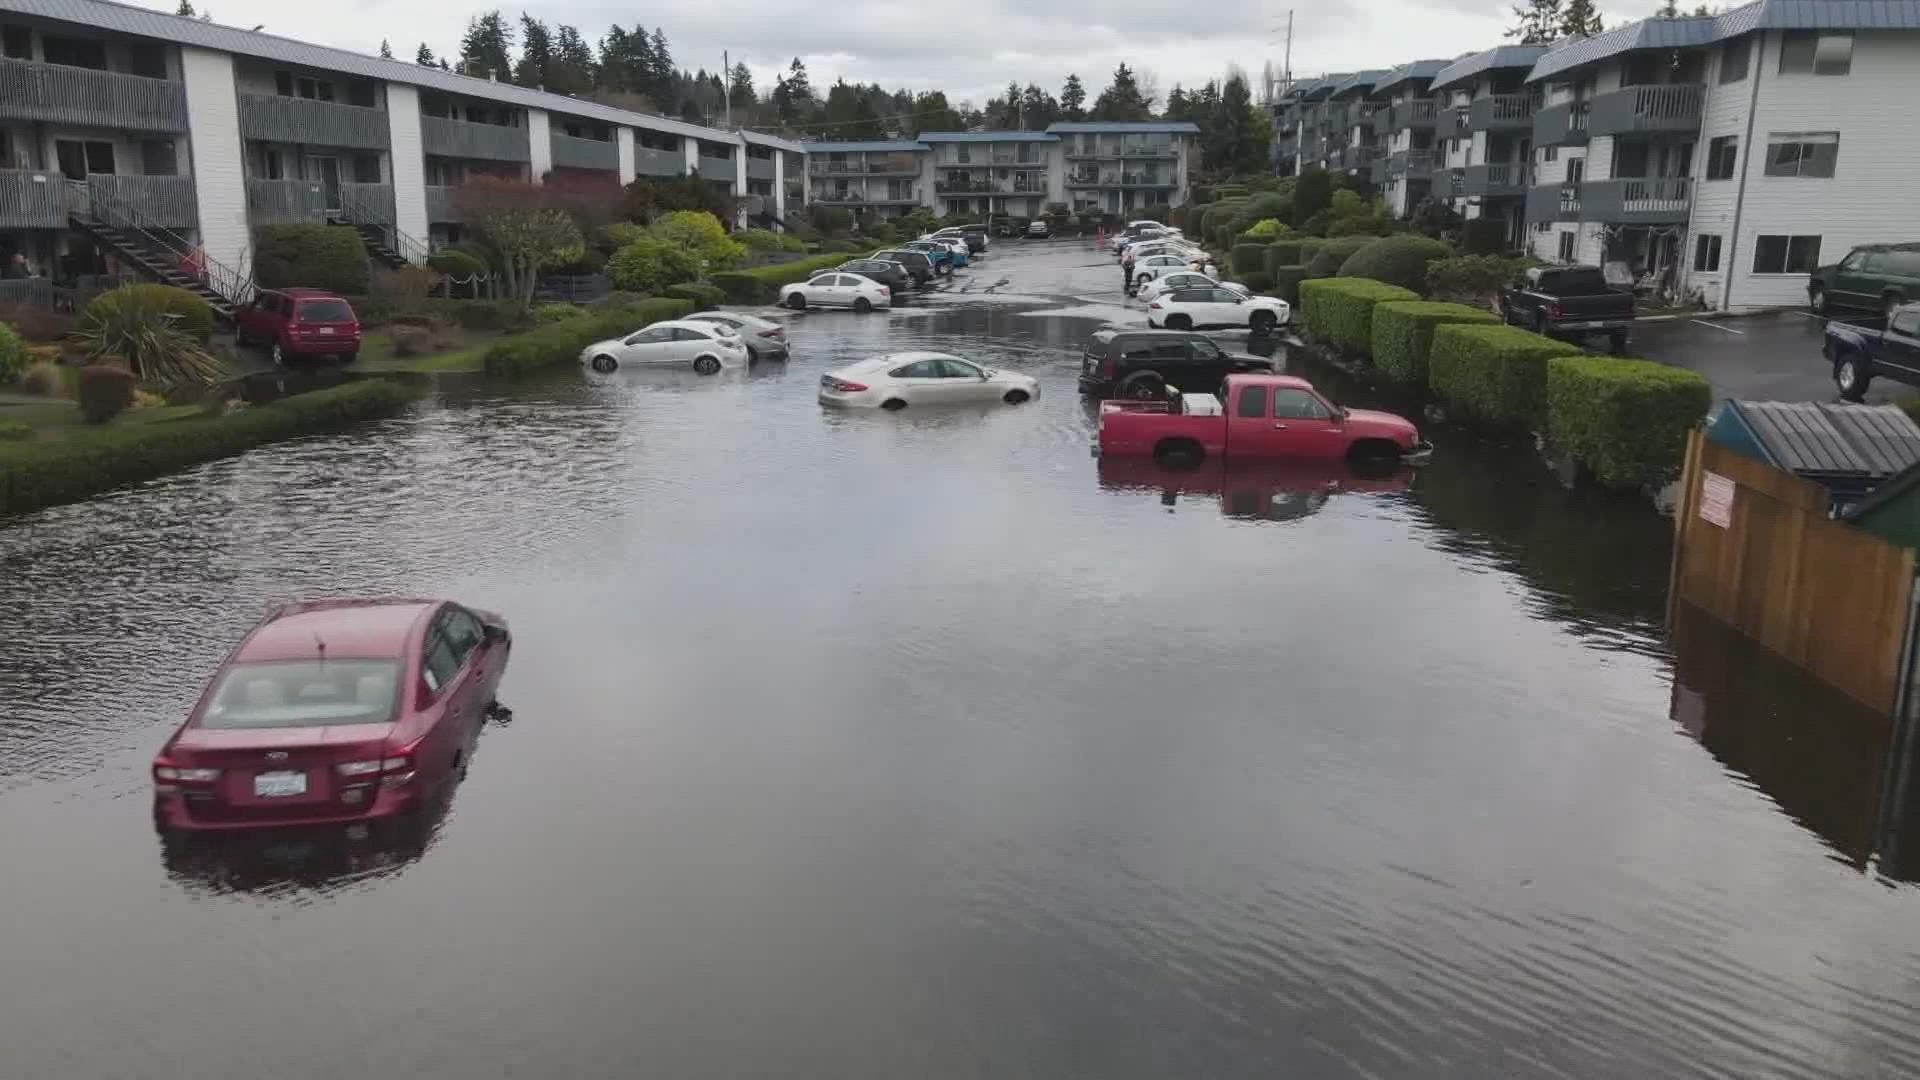 Heavy rain and winds are impacting communities across western Washington on Tuesday.